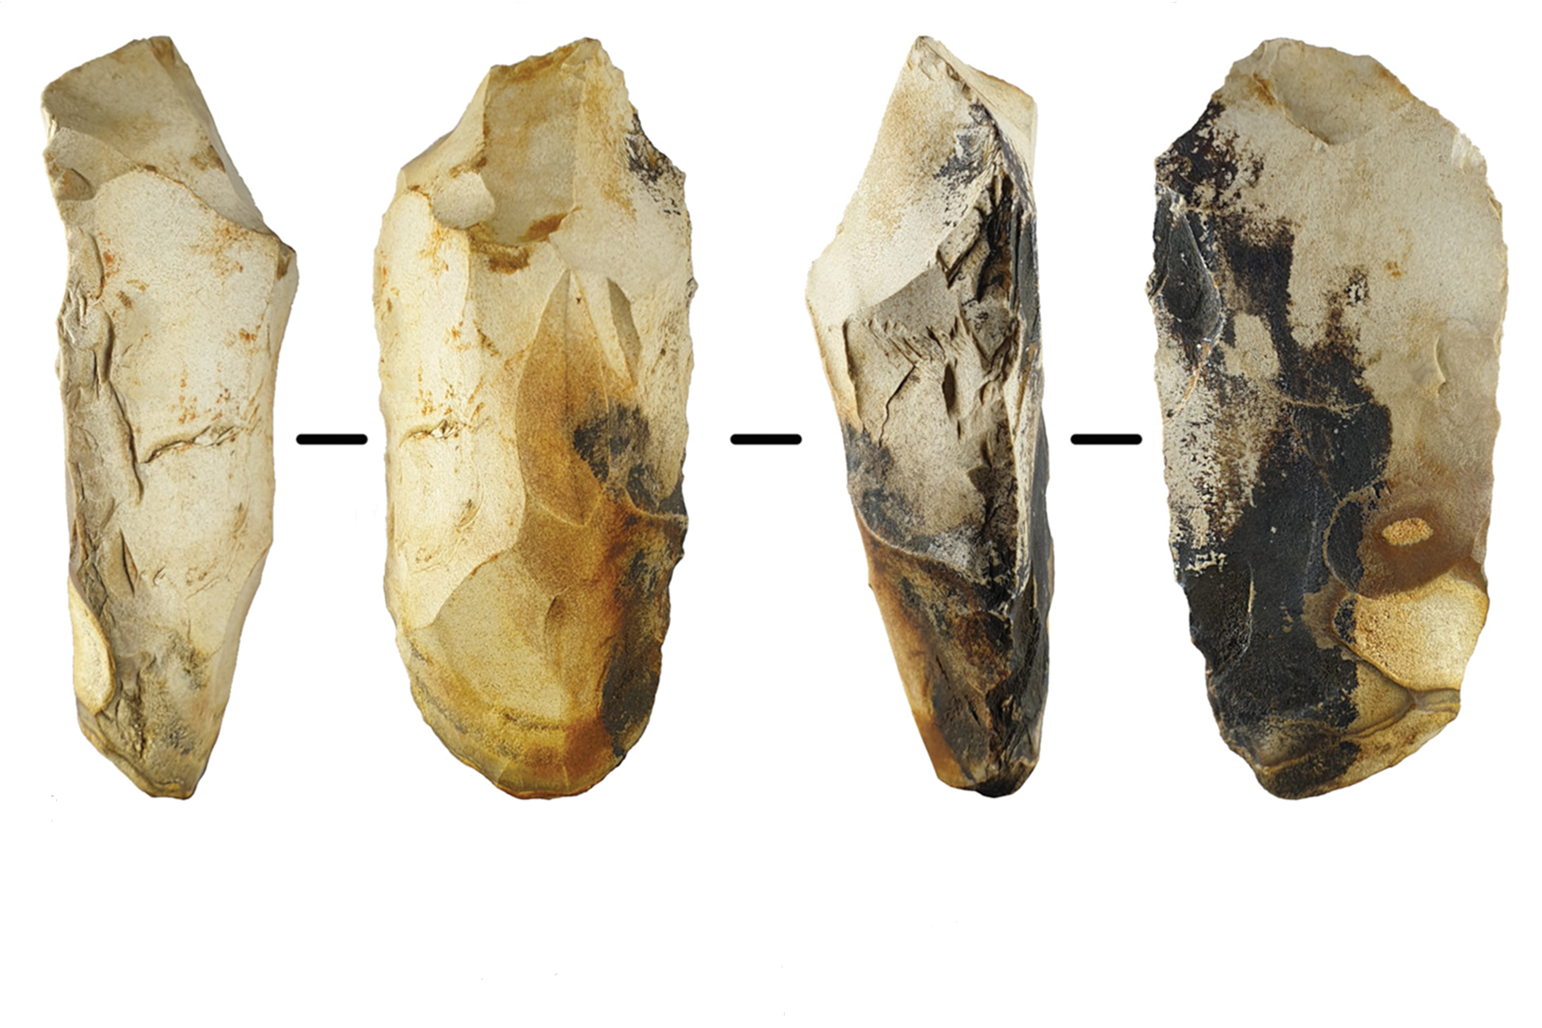 Archaeologists find prehistoric settlement “surprisingly” survived crisis